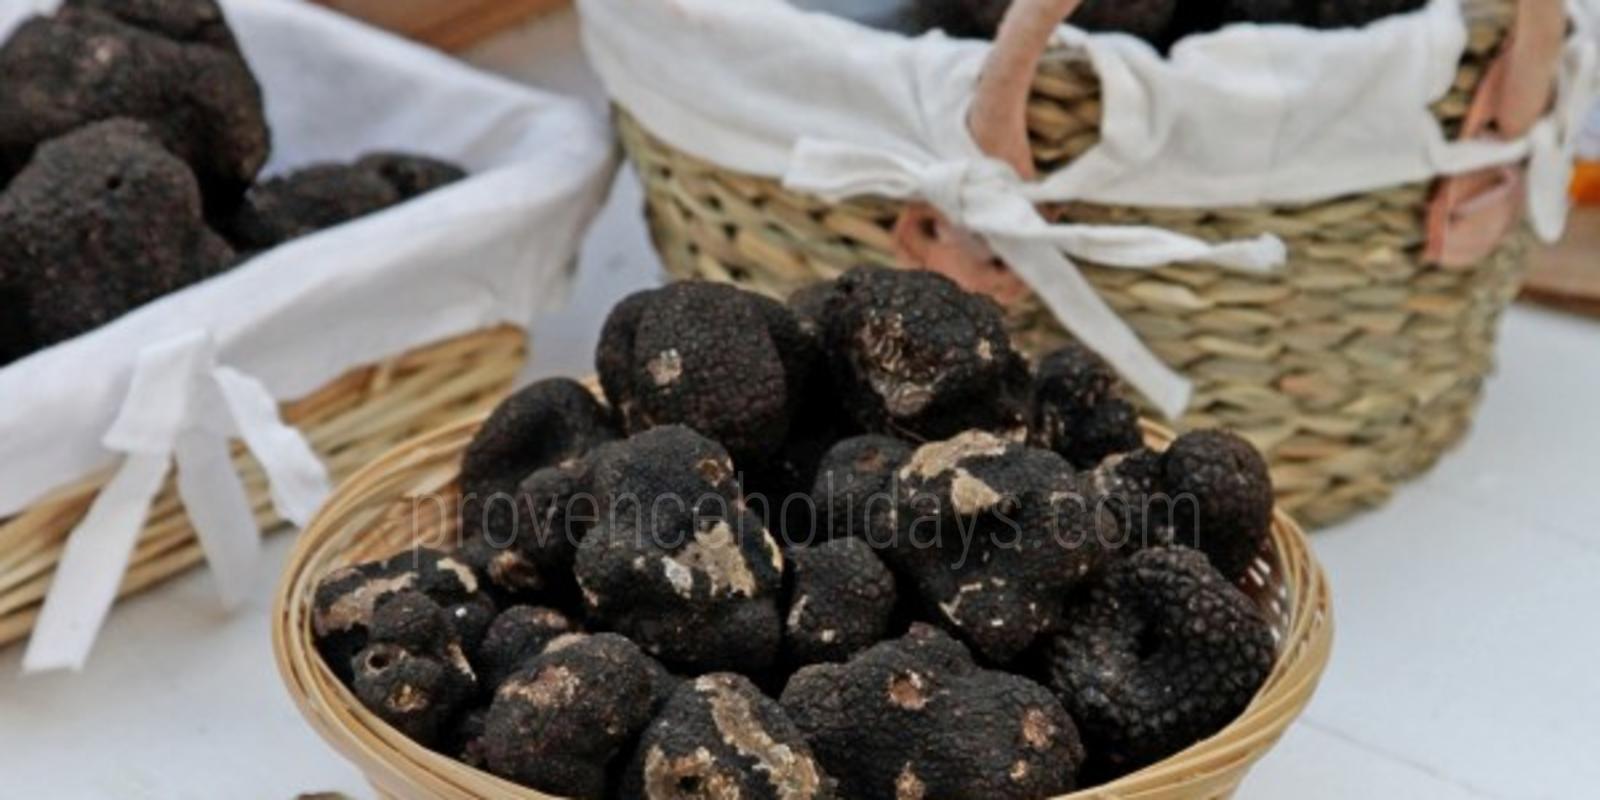 Valréas truffle market - 0